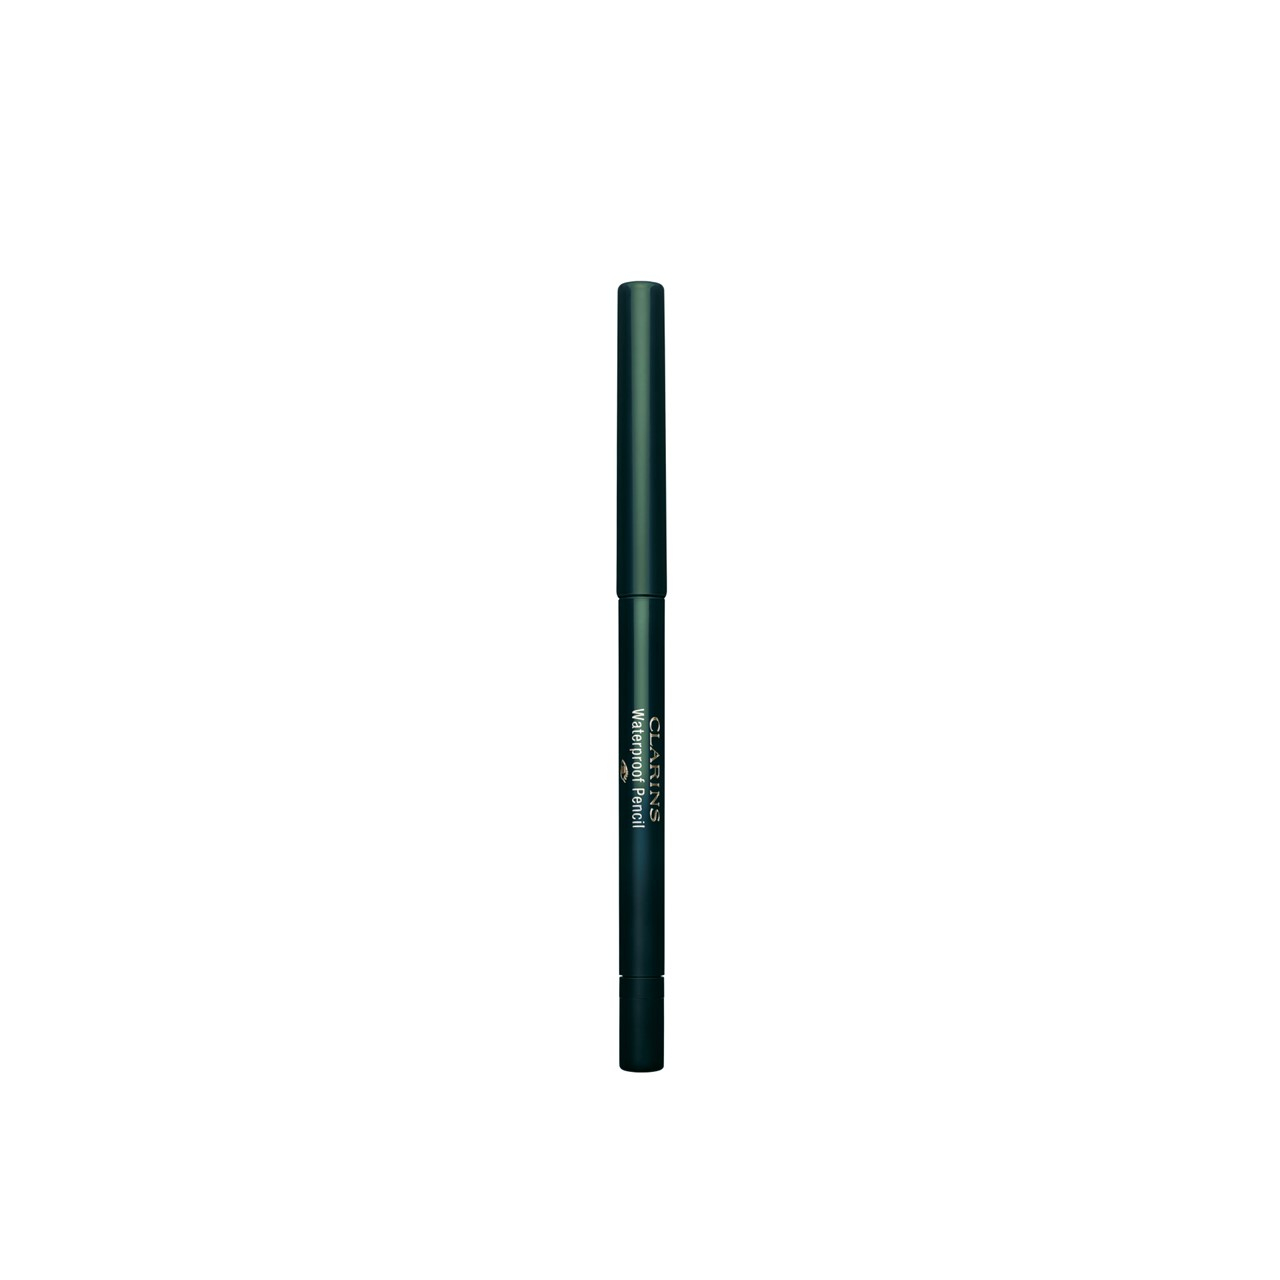 Clarins Waterproof Pencil Long-Lasting Eyeliner 05 Forest 0.29g